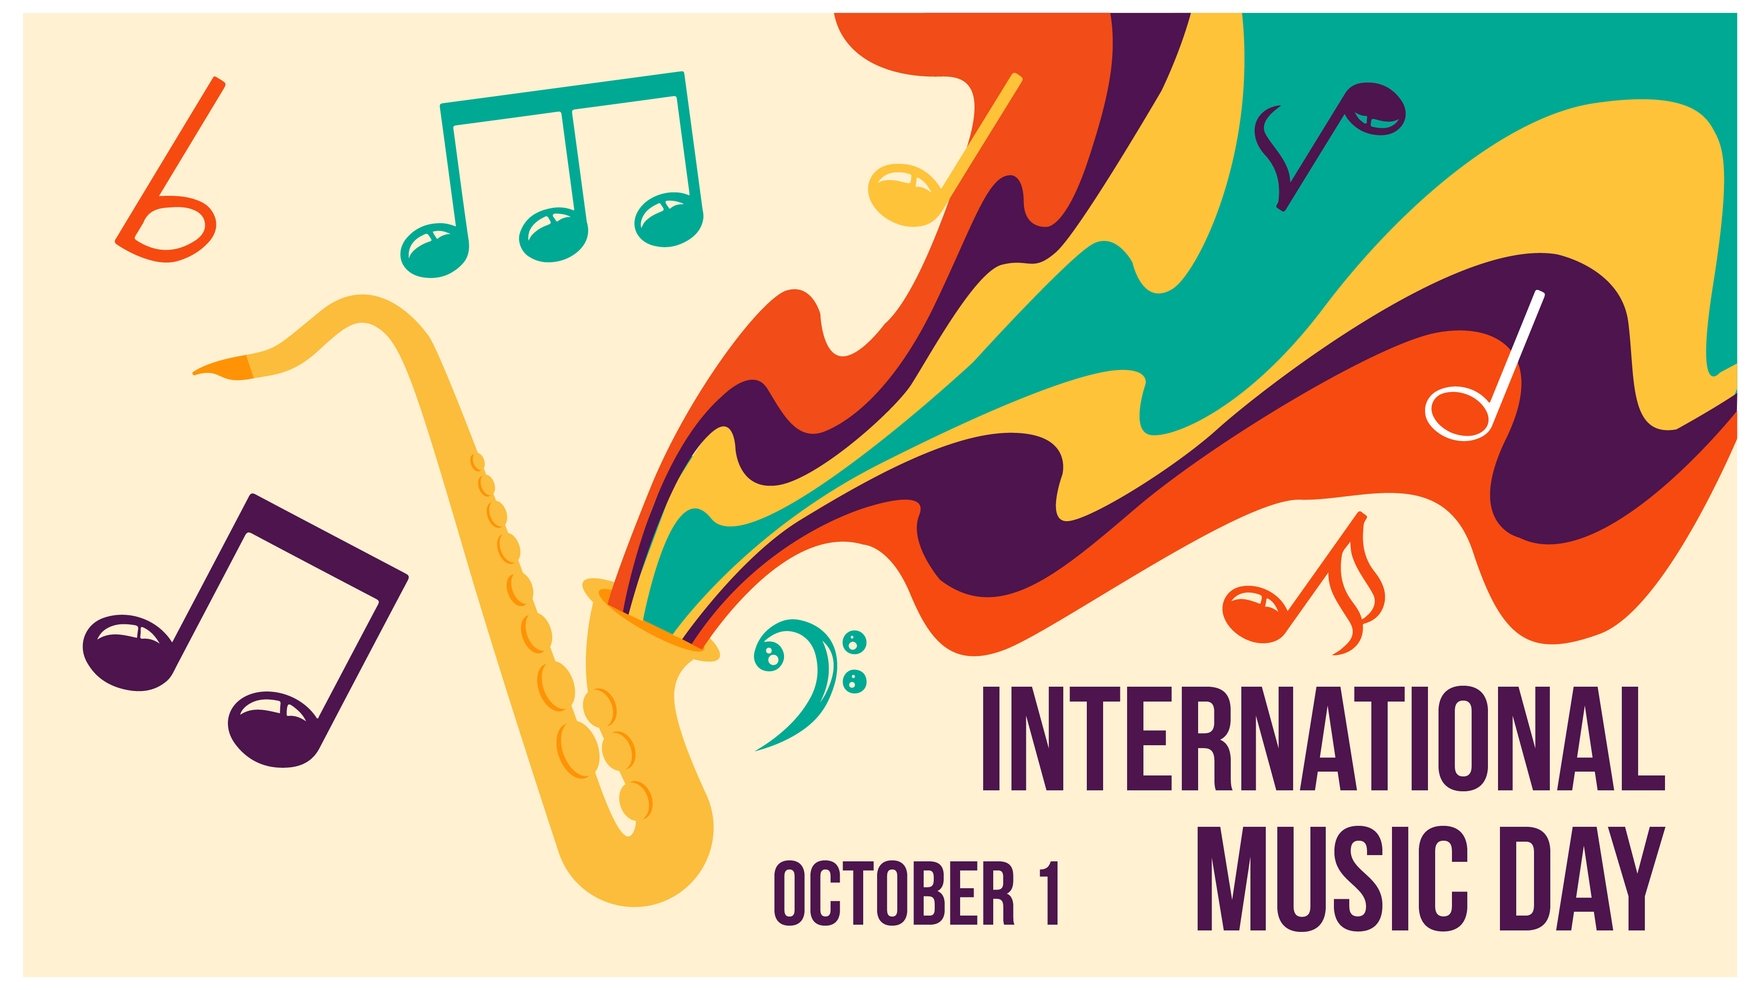 International Music Day Image Background